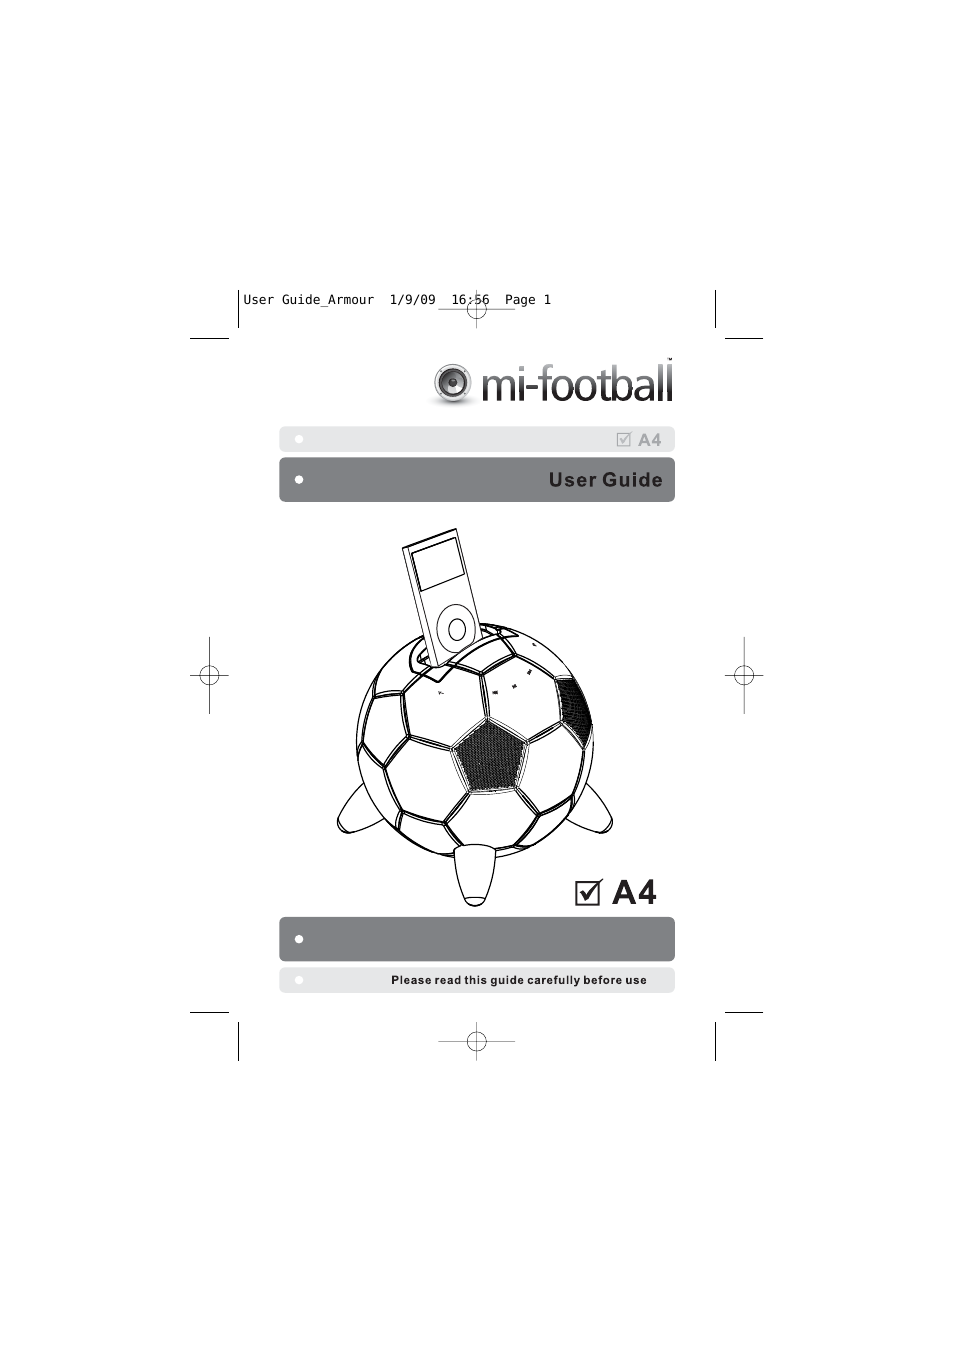 mifootball